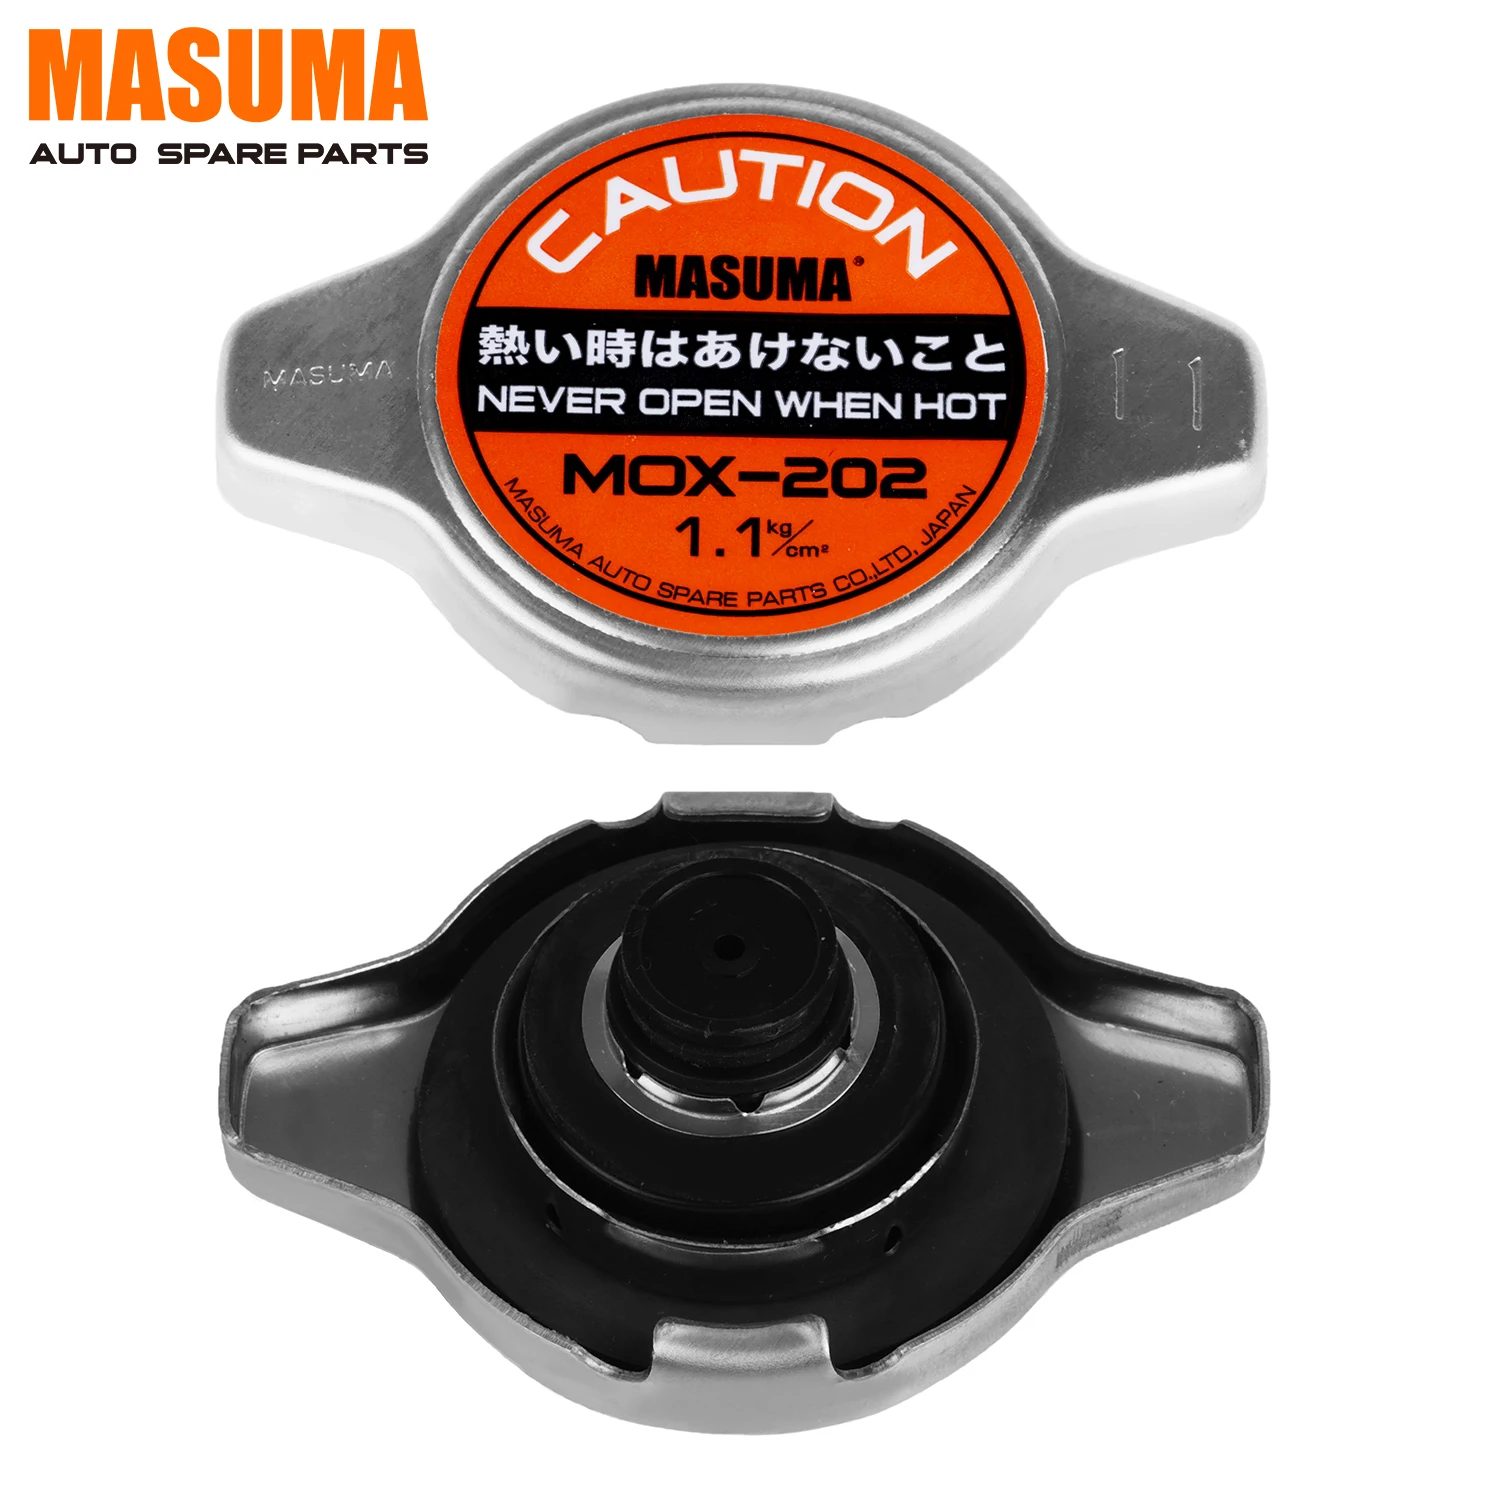 Source MOX-202 MASUMA pressure universal radiator cover 16401 